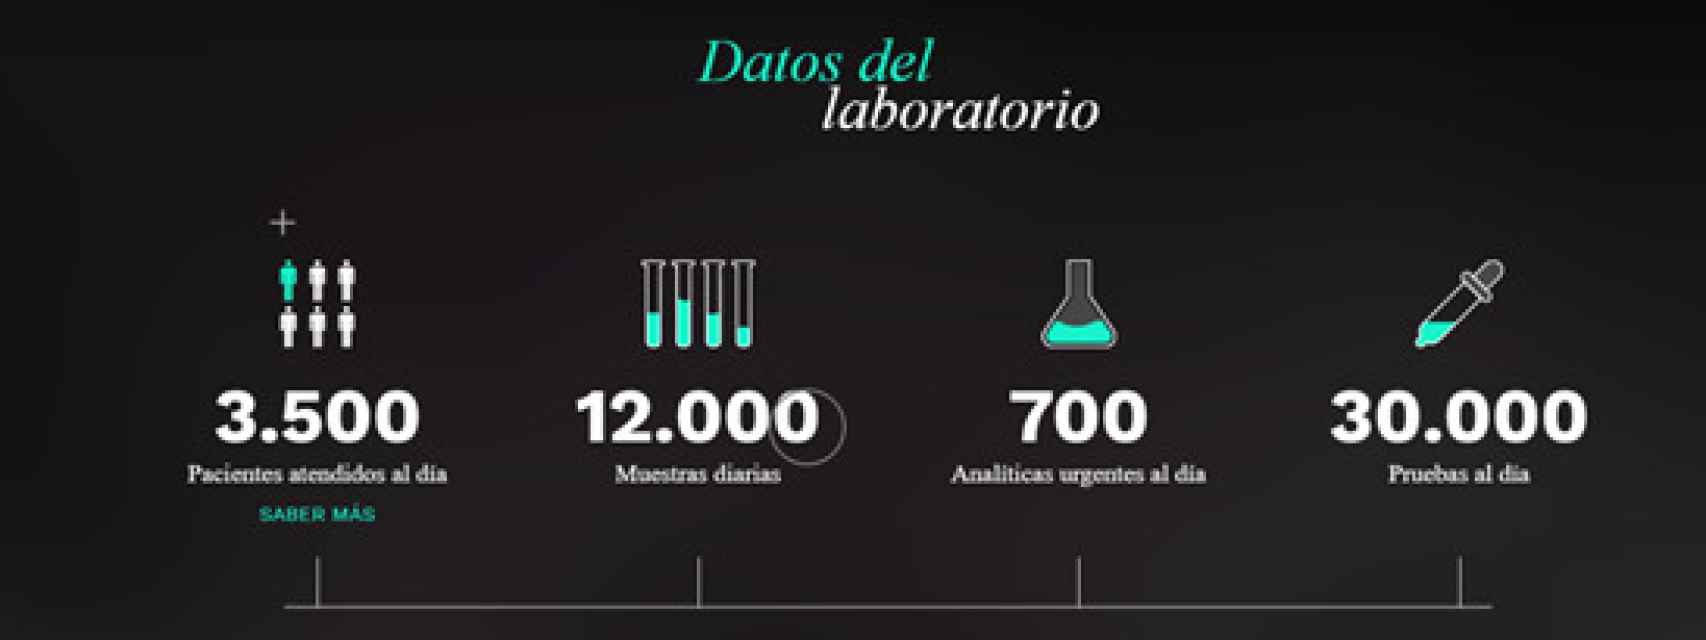 Datos del laboratorio.